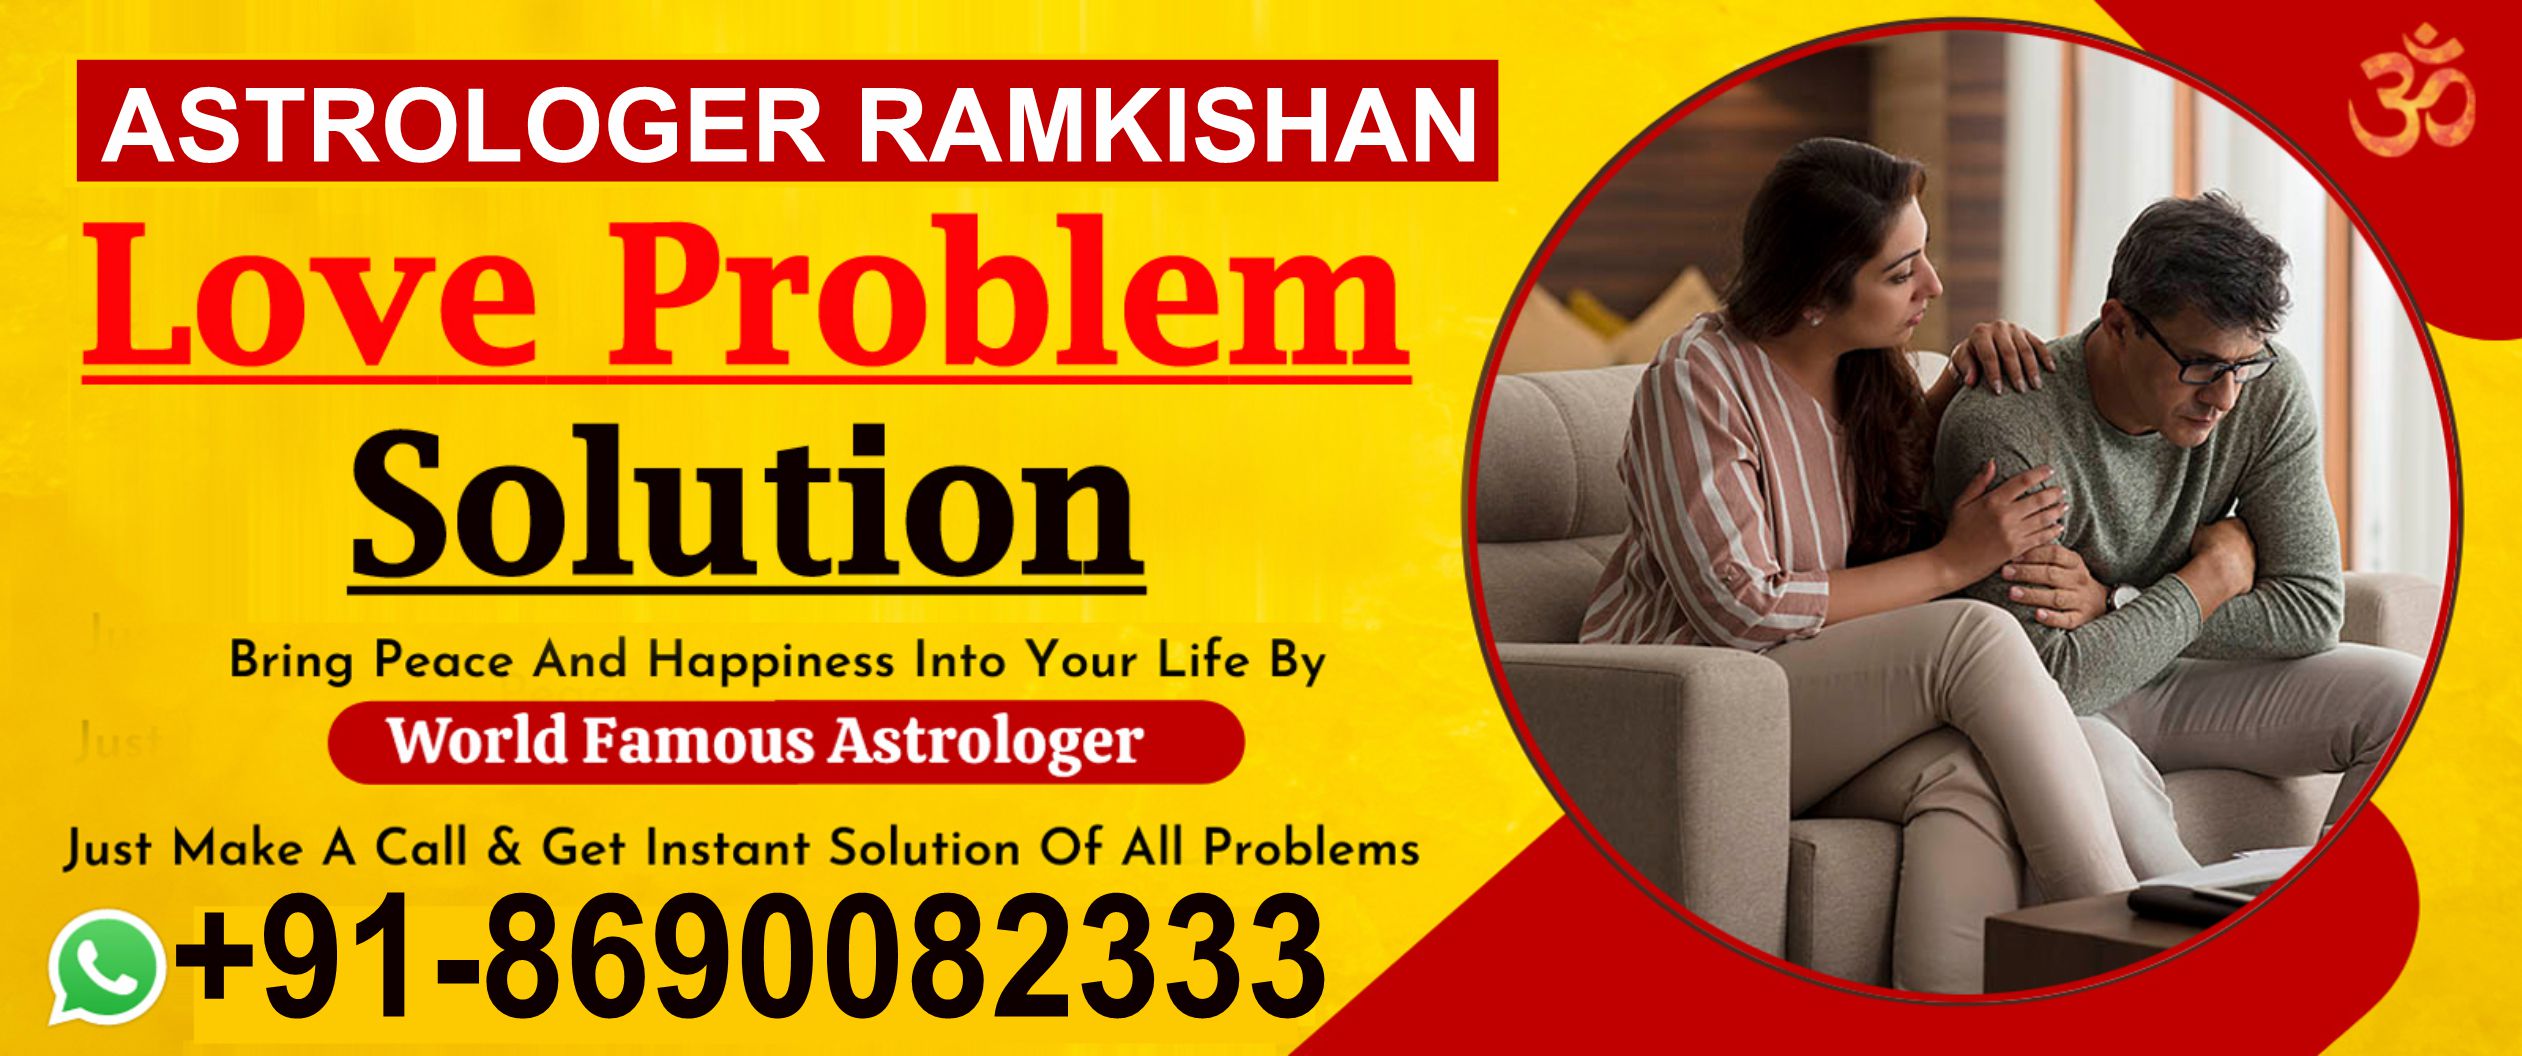 Astrologer Ramkishan  +91-8690082333